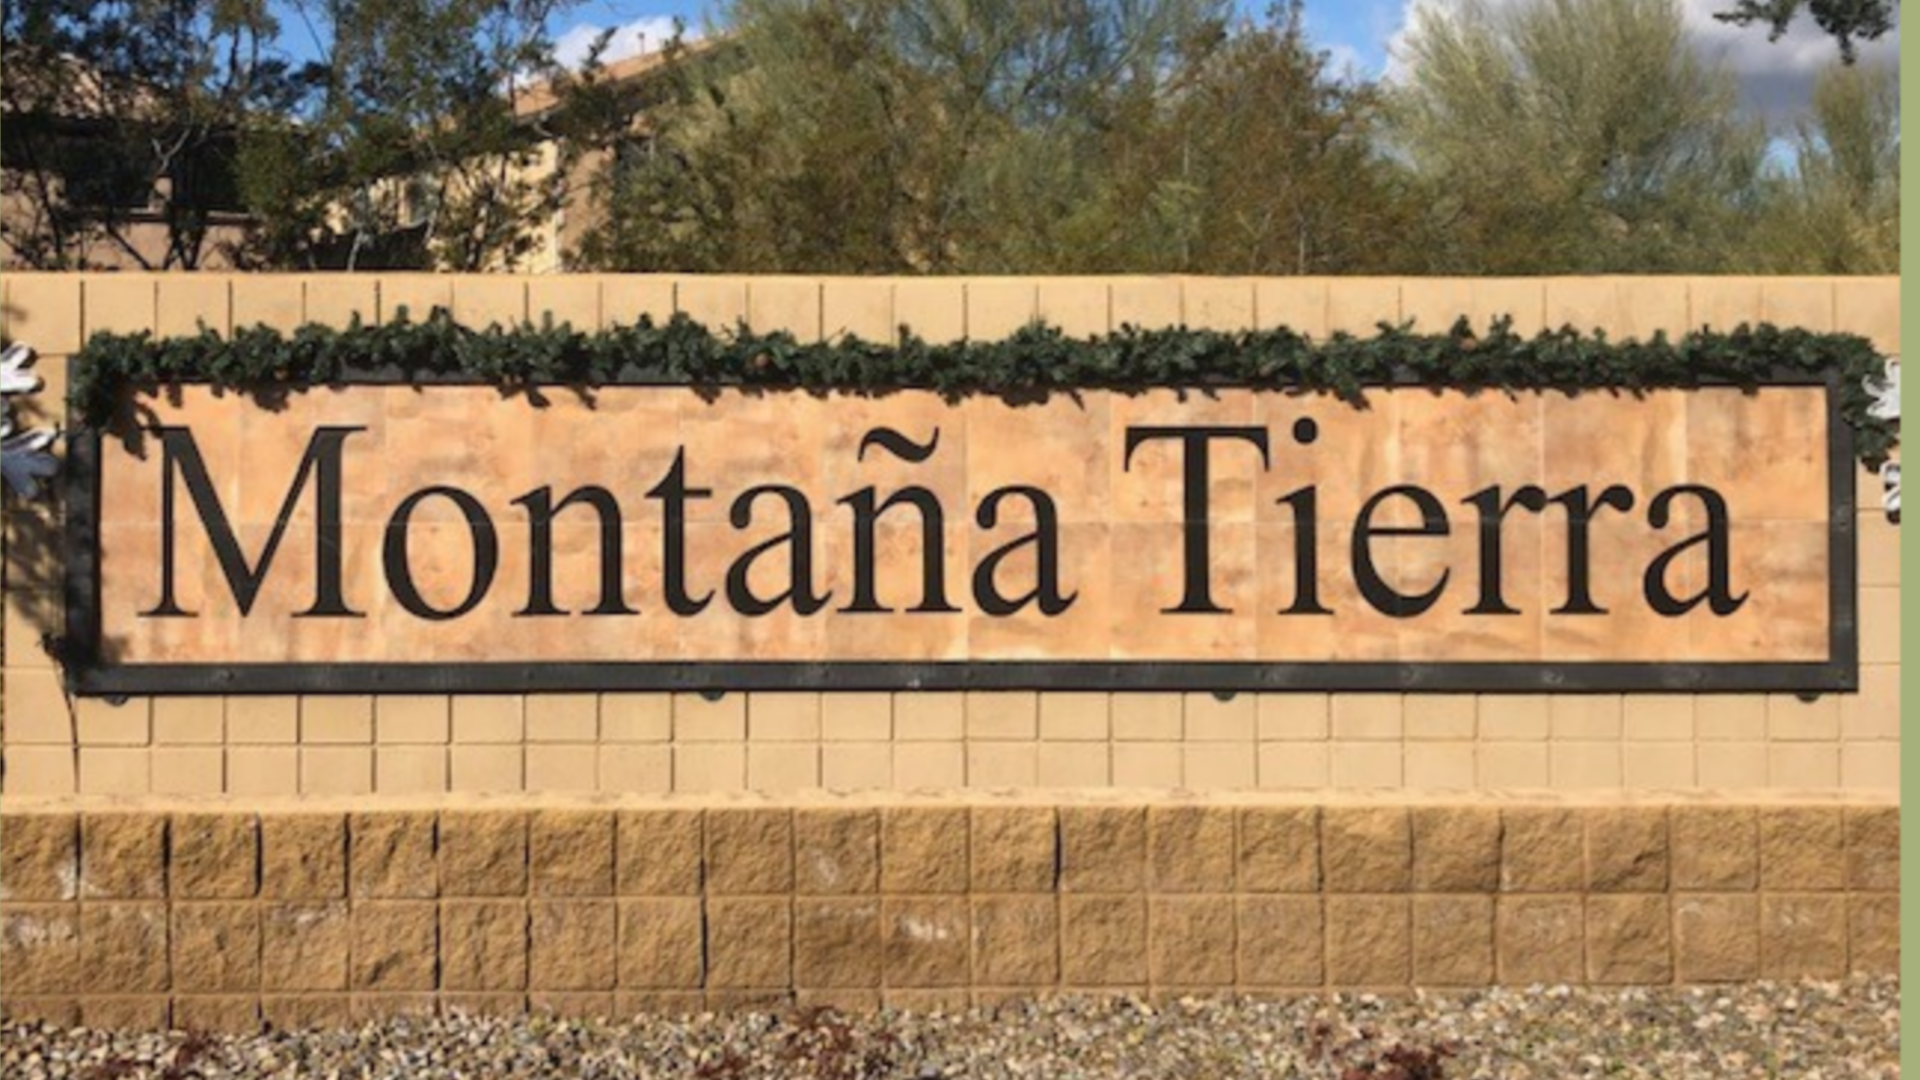 Montana Tierrra Homes for sale Phoenix 85085